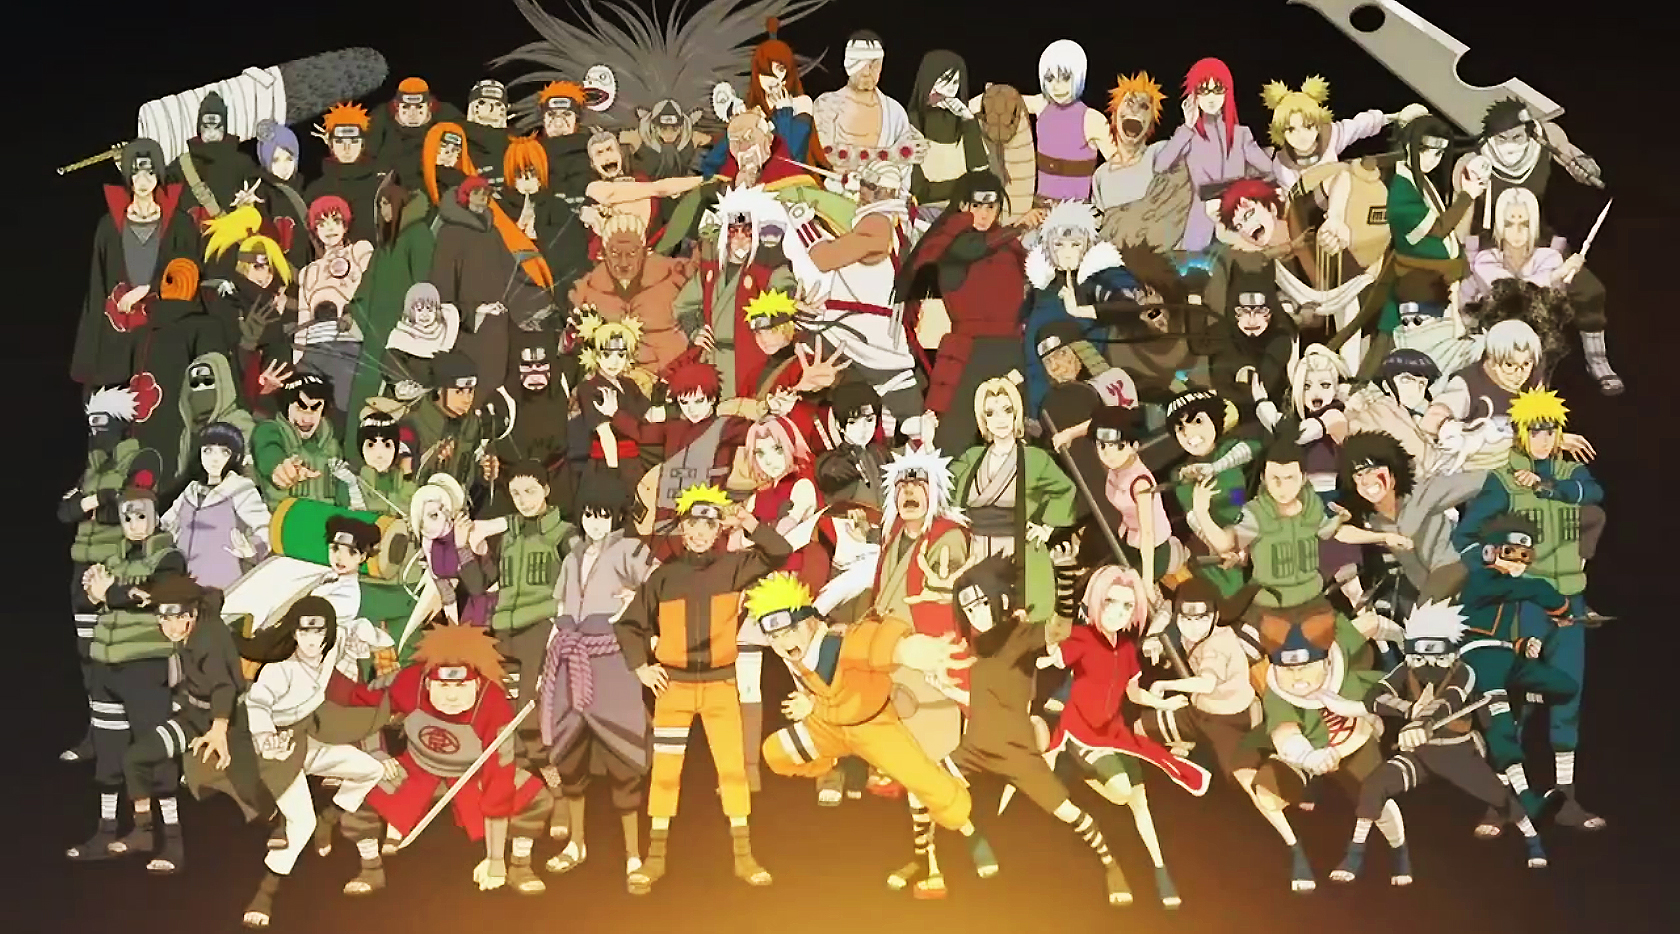 all anime wallpaper hd,people,social group,crowd,cartoon,community